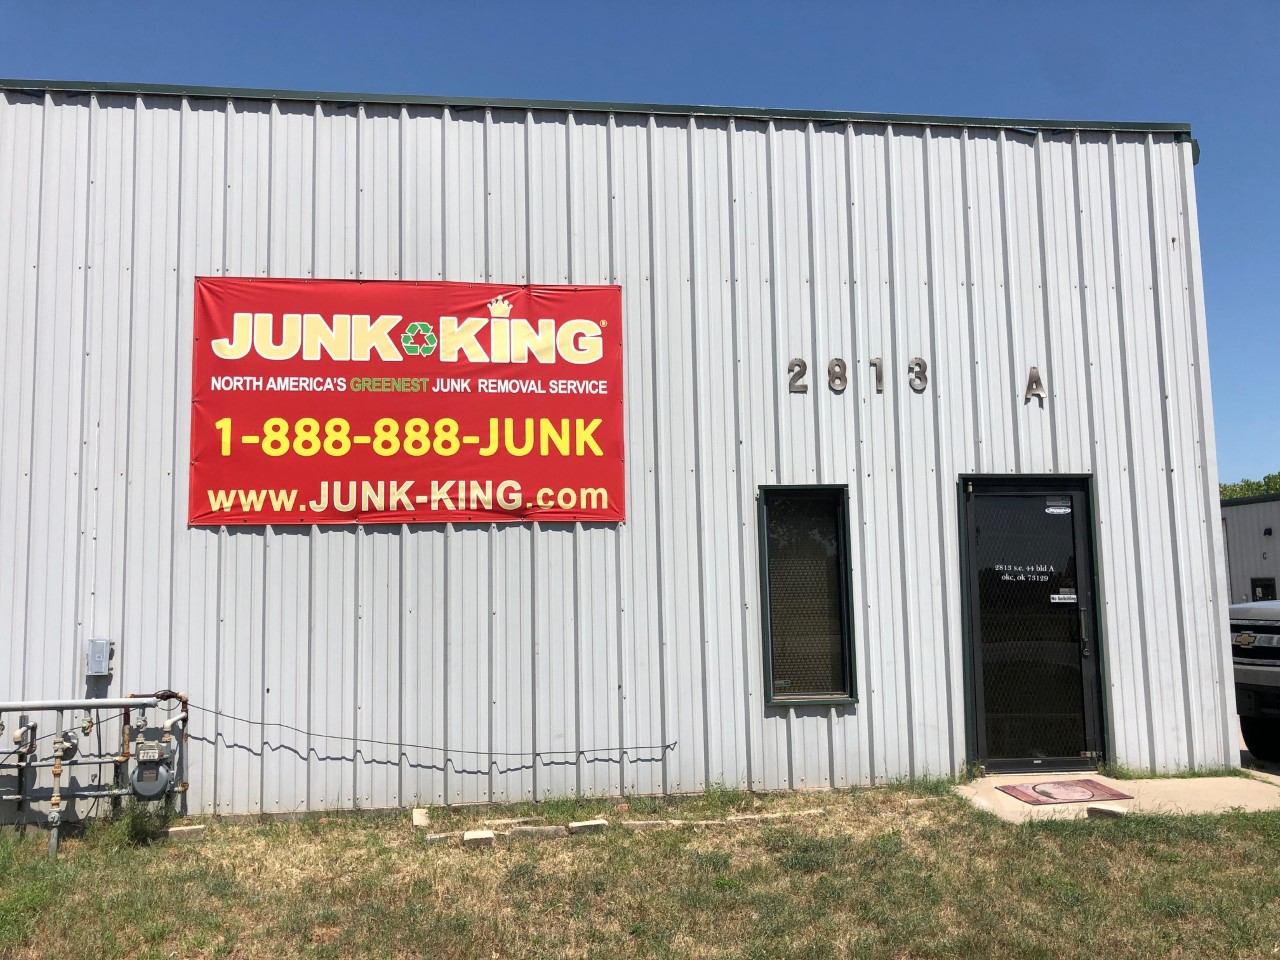 Exterior Junk King Oklahoma City office